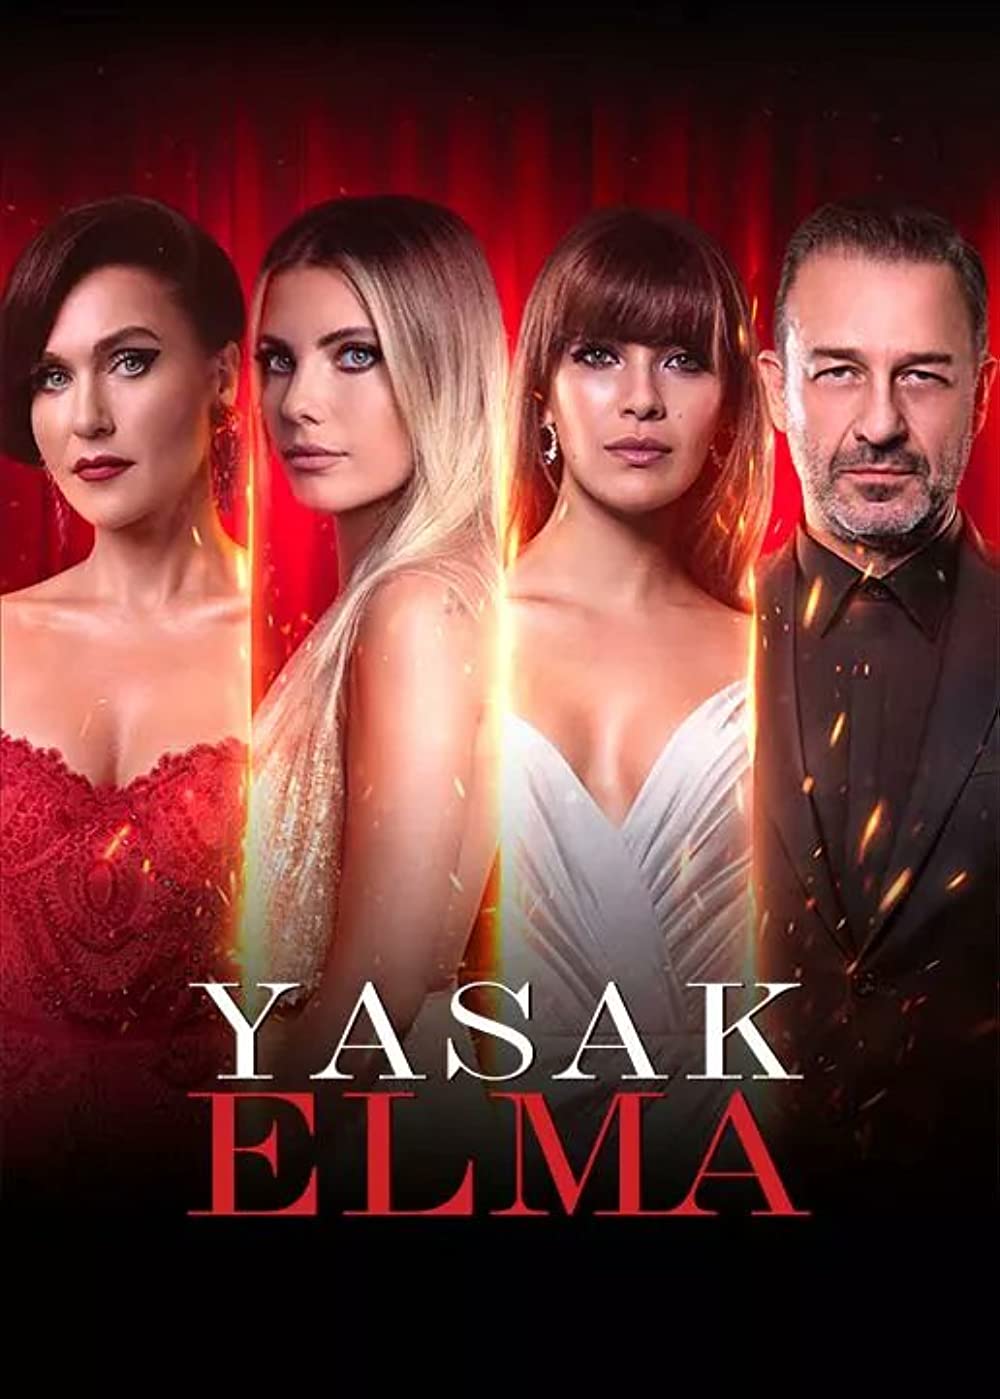 Yasak Elma TV Series (2018) Cast & Crew, Release Date, Story, Season, Episodes, Review, Poster, Trailer
